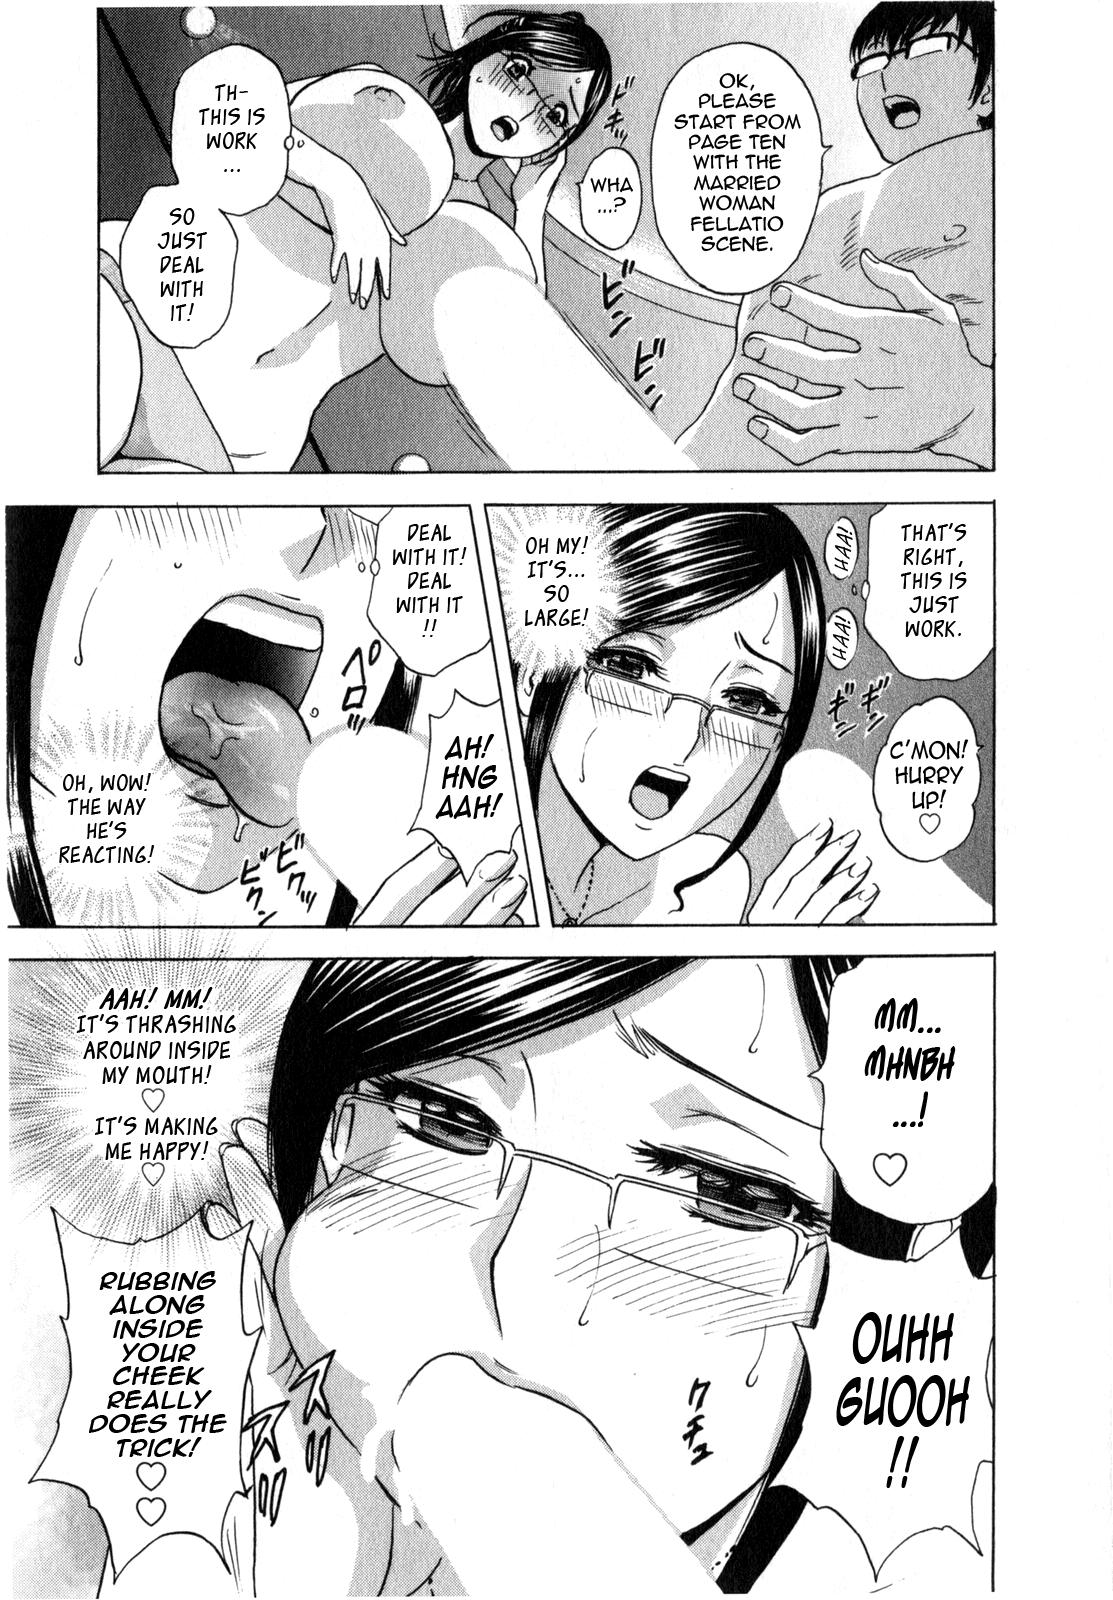 [Hidemaru] Life with Married Women Just Like a Manga 2 - Ch. 1-6 [English] {Tadanohito} 18